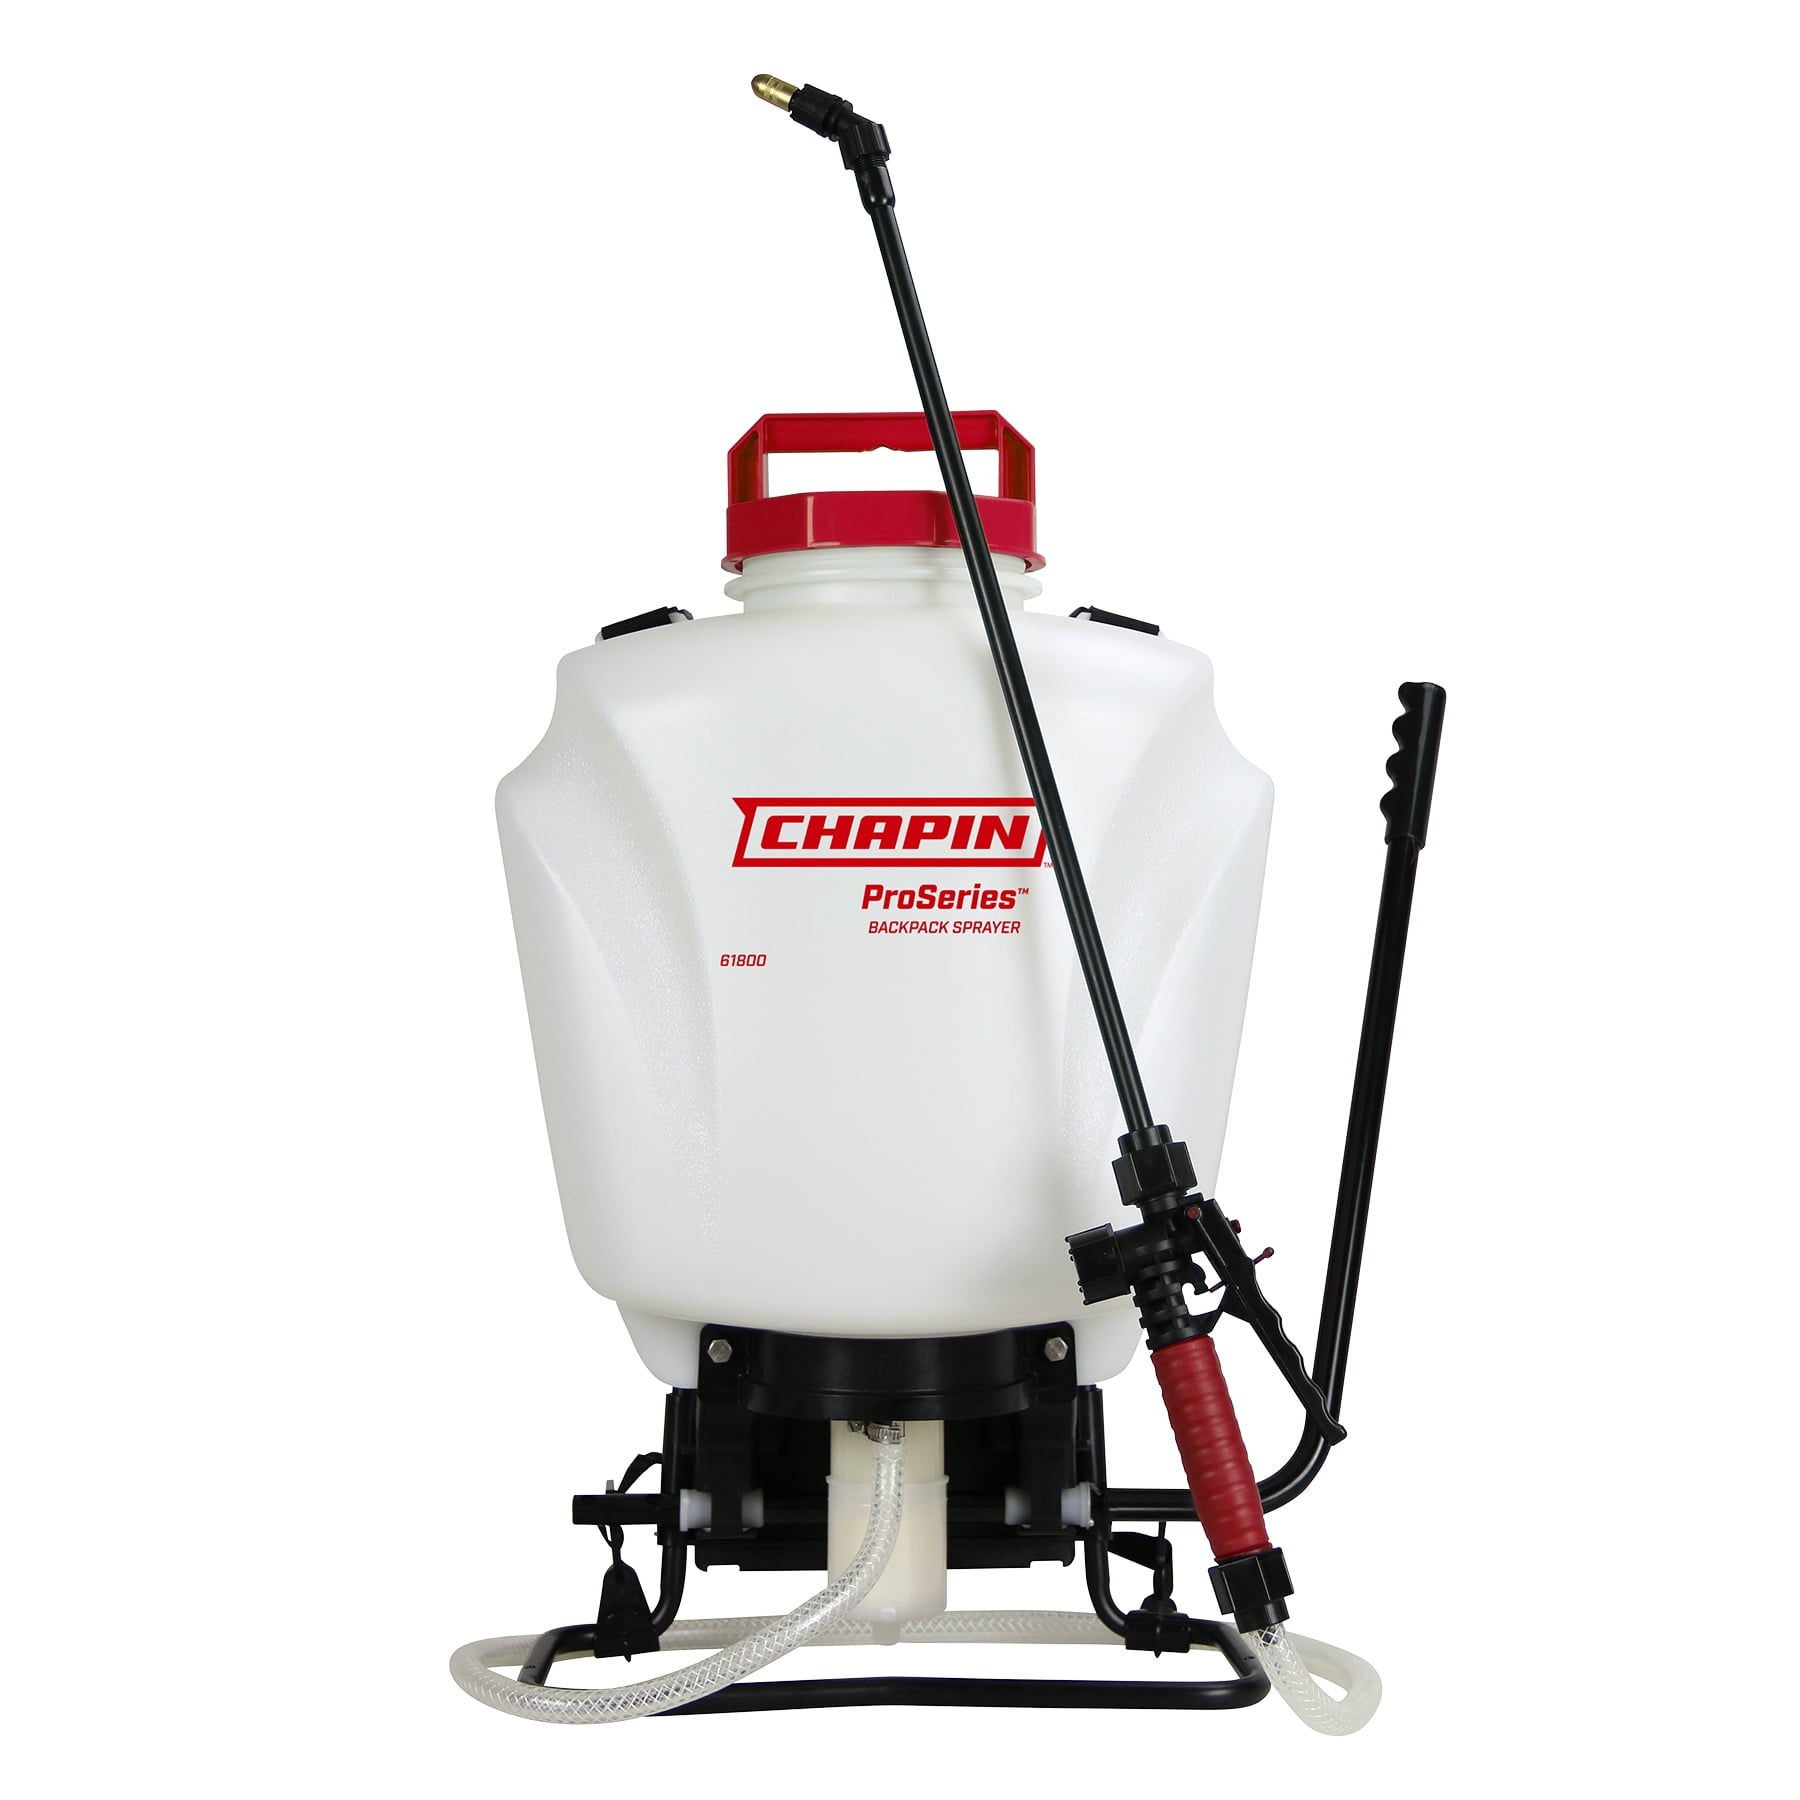 New Jacto Manual Internal Pump Commercial Duty 1.3 Gallon Sprayer HH5 